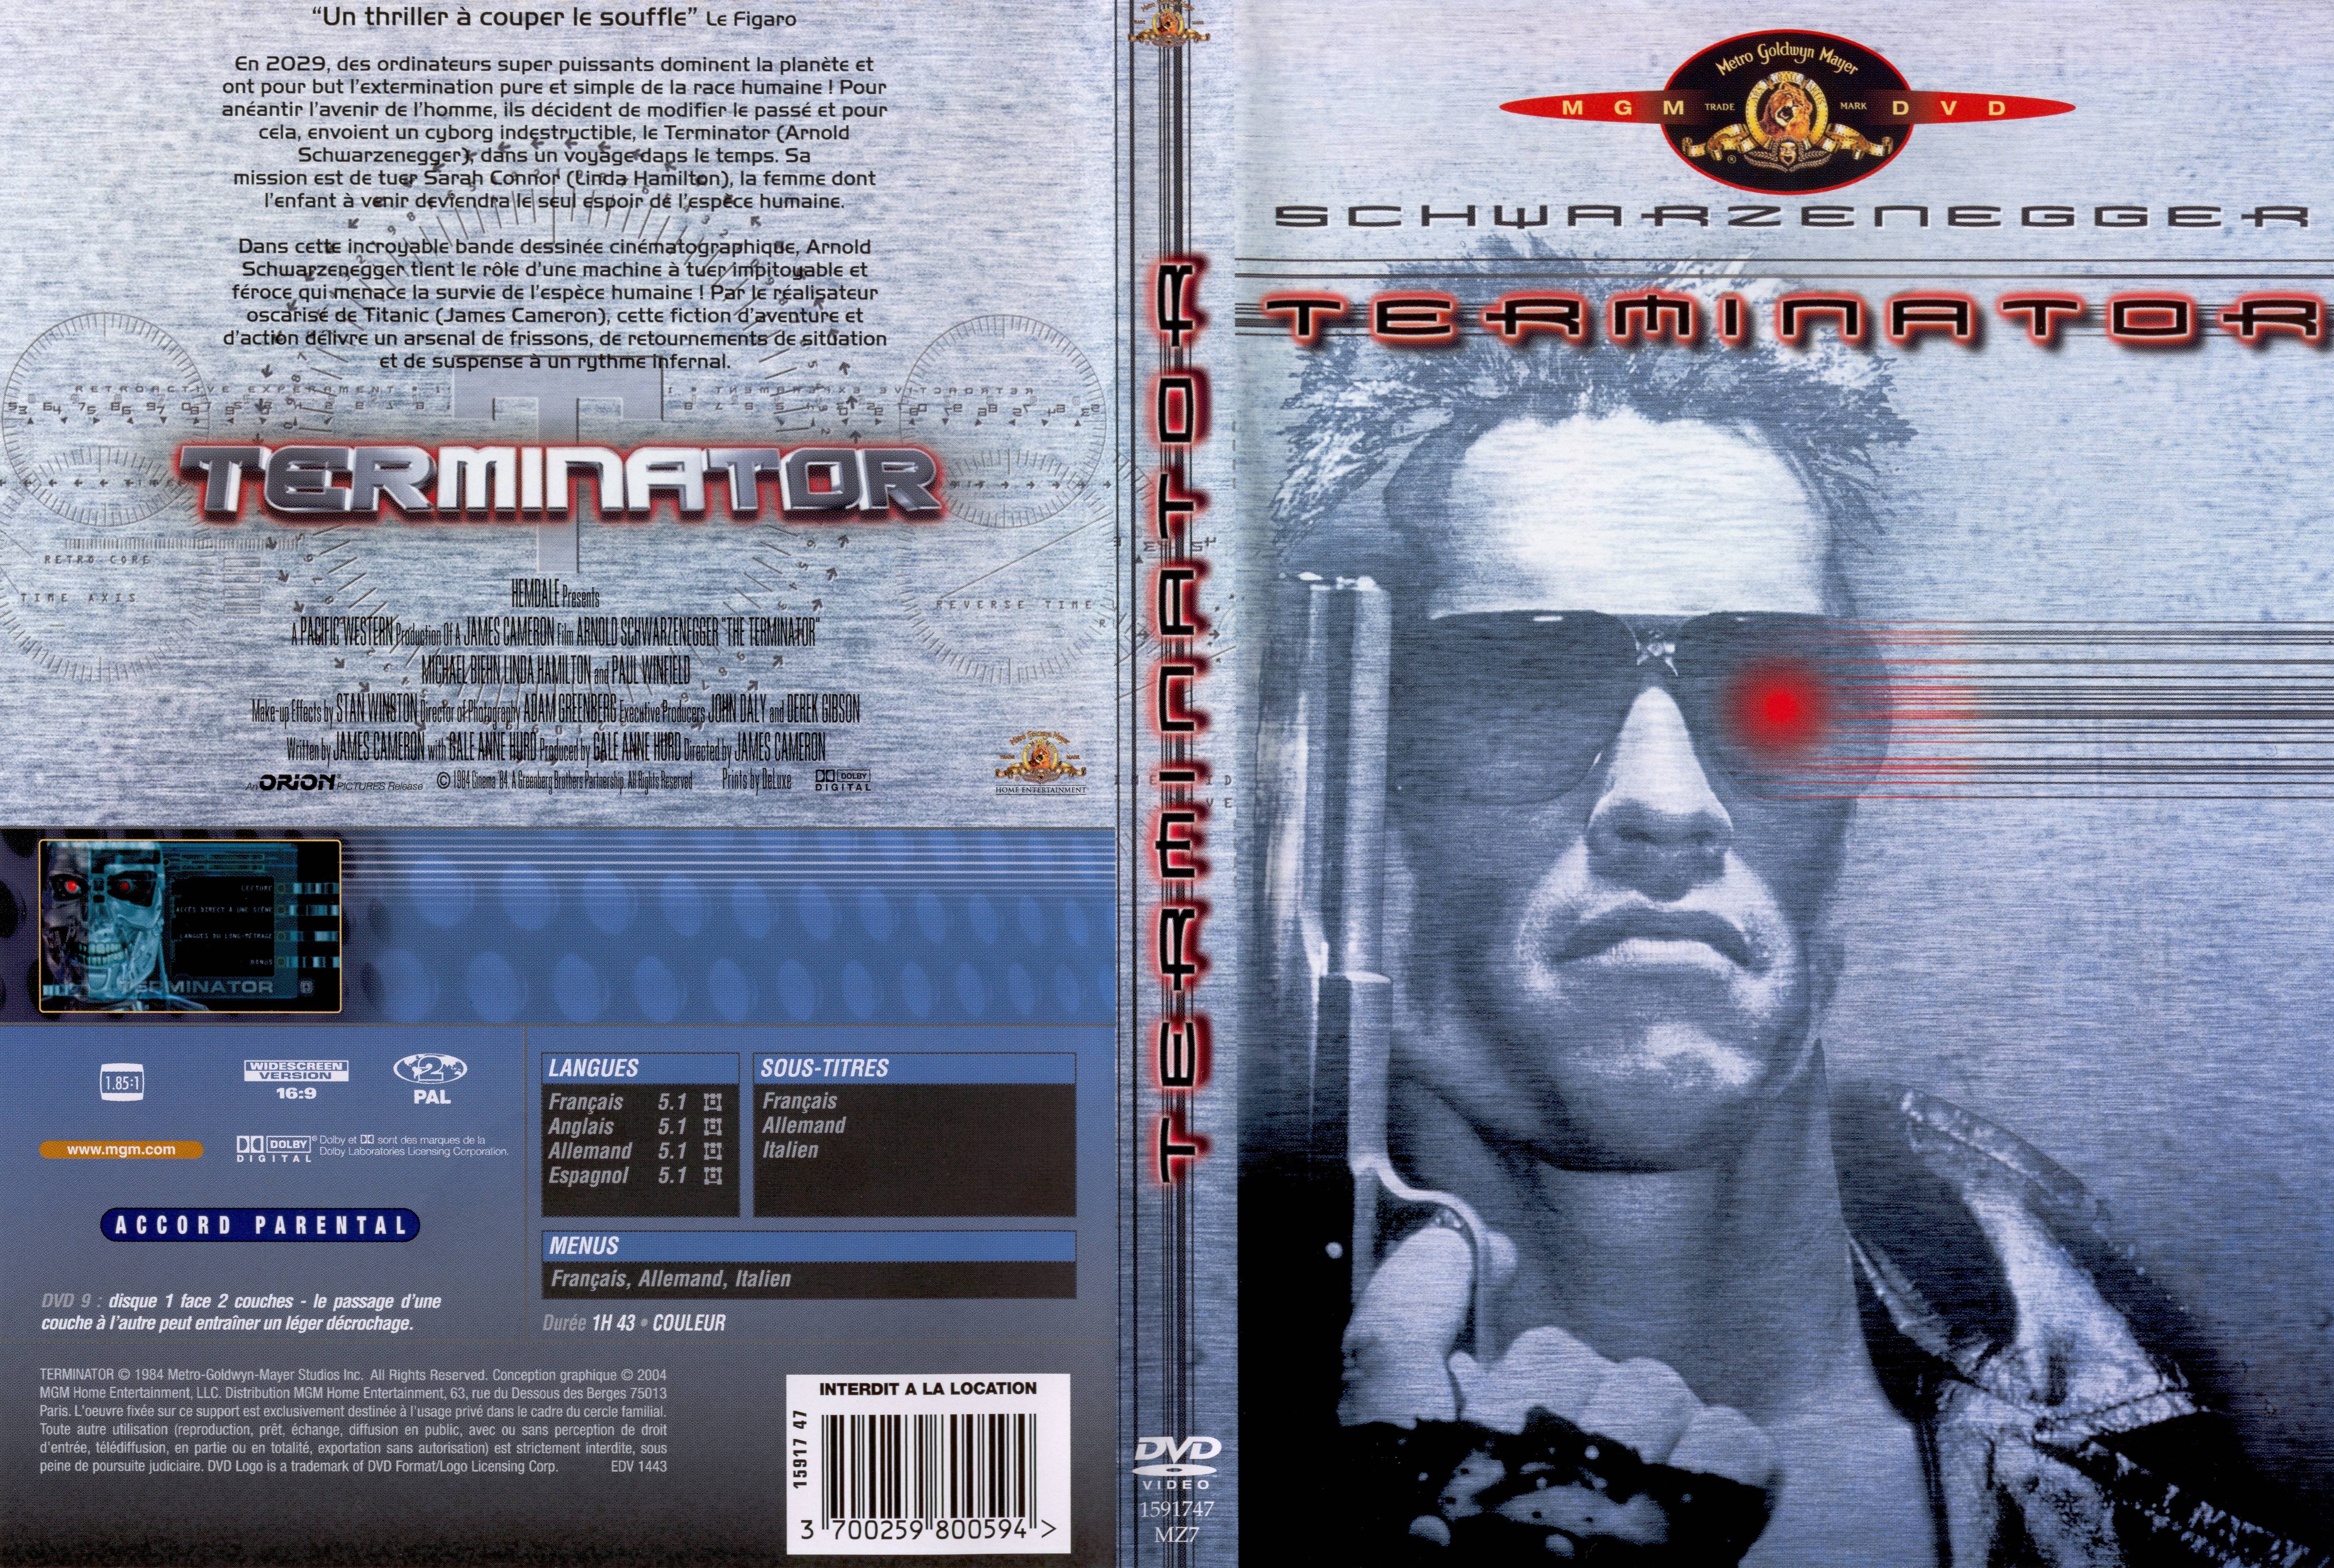 Jaquette DVD Terminator